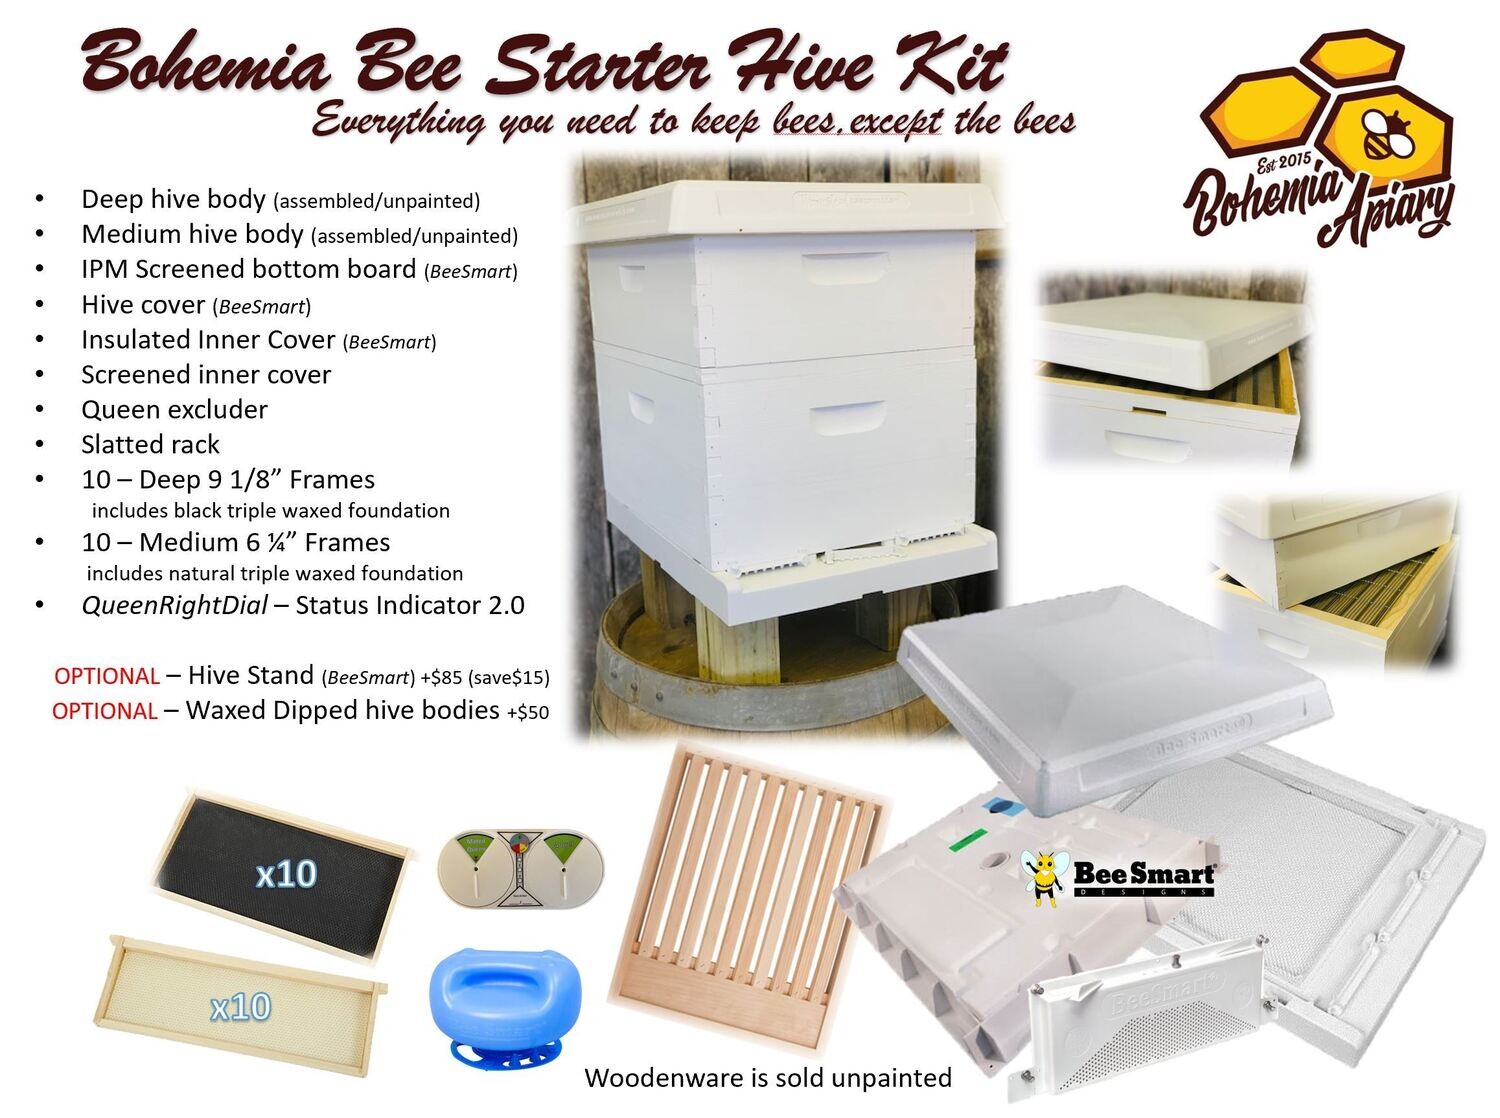 Bohemia Bee Starter Hive Kit